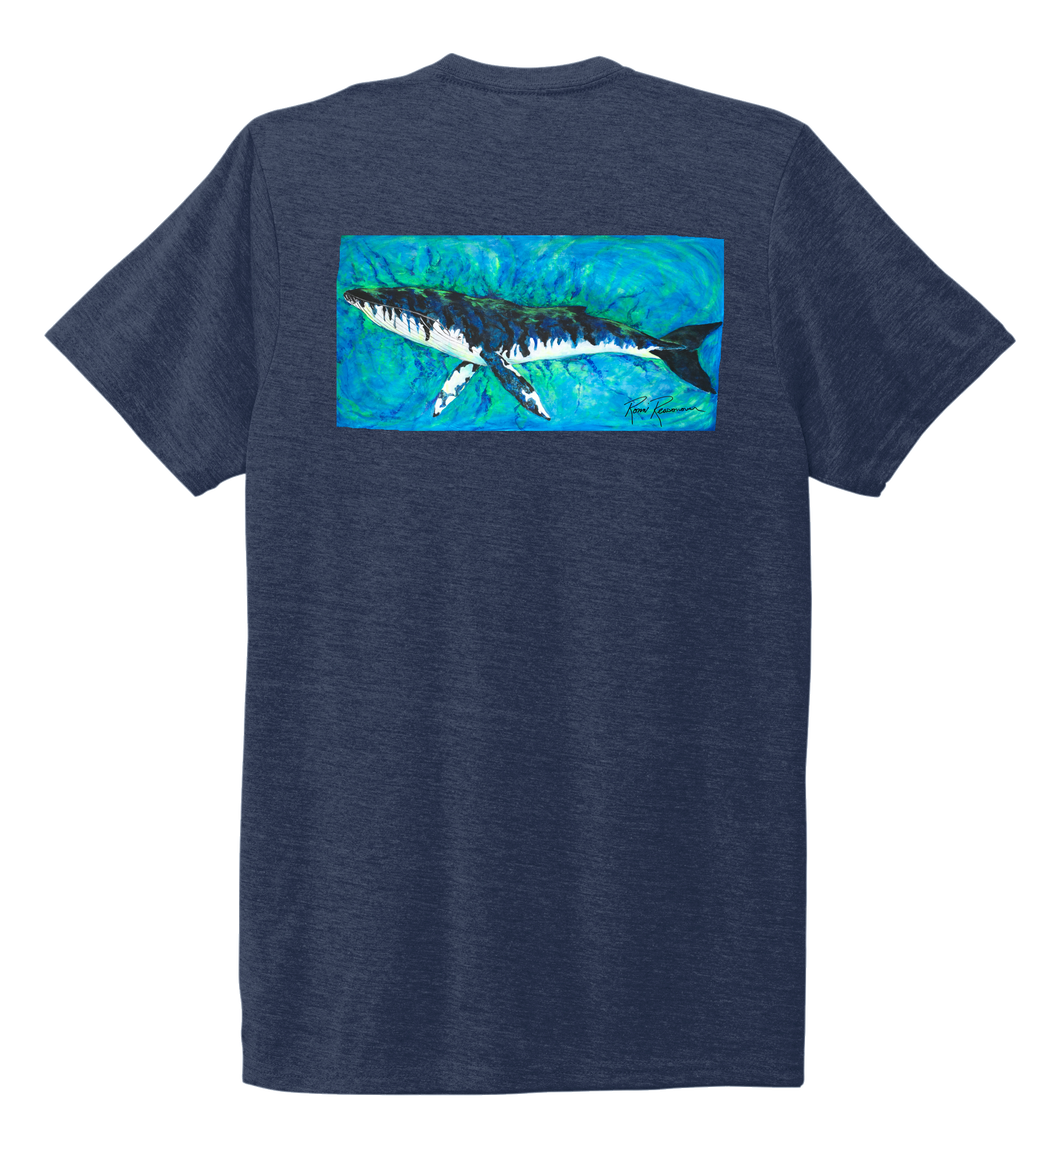 Ronnie Reasonover, The Whale, Crew Neck T-Shirt in Deep Sea Blue